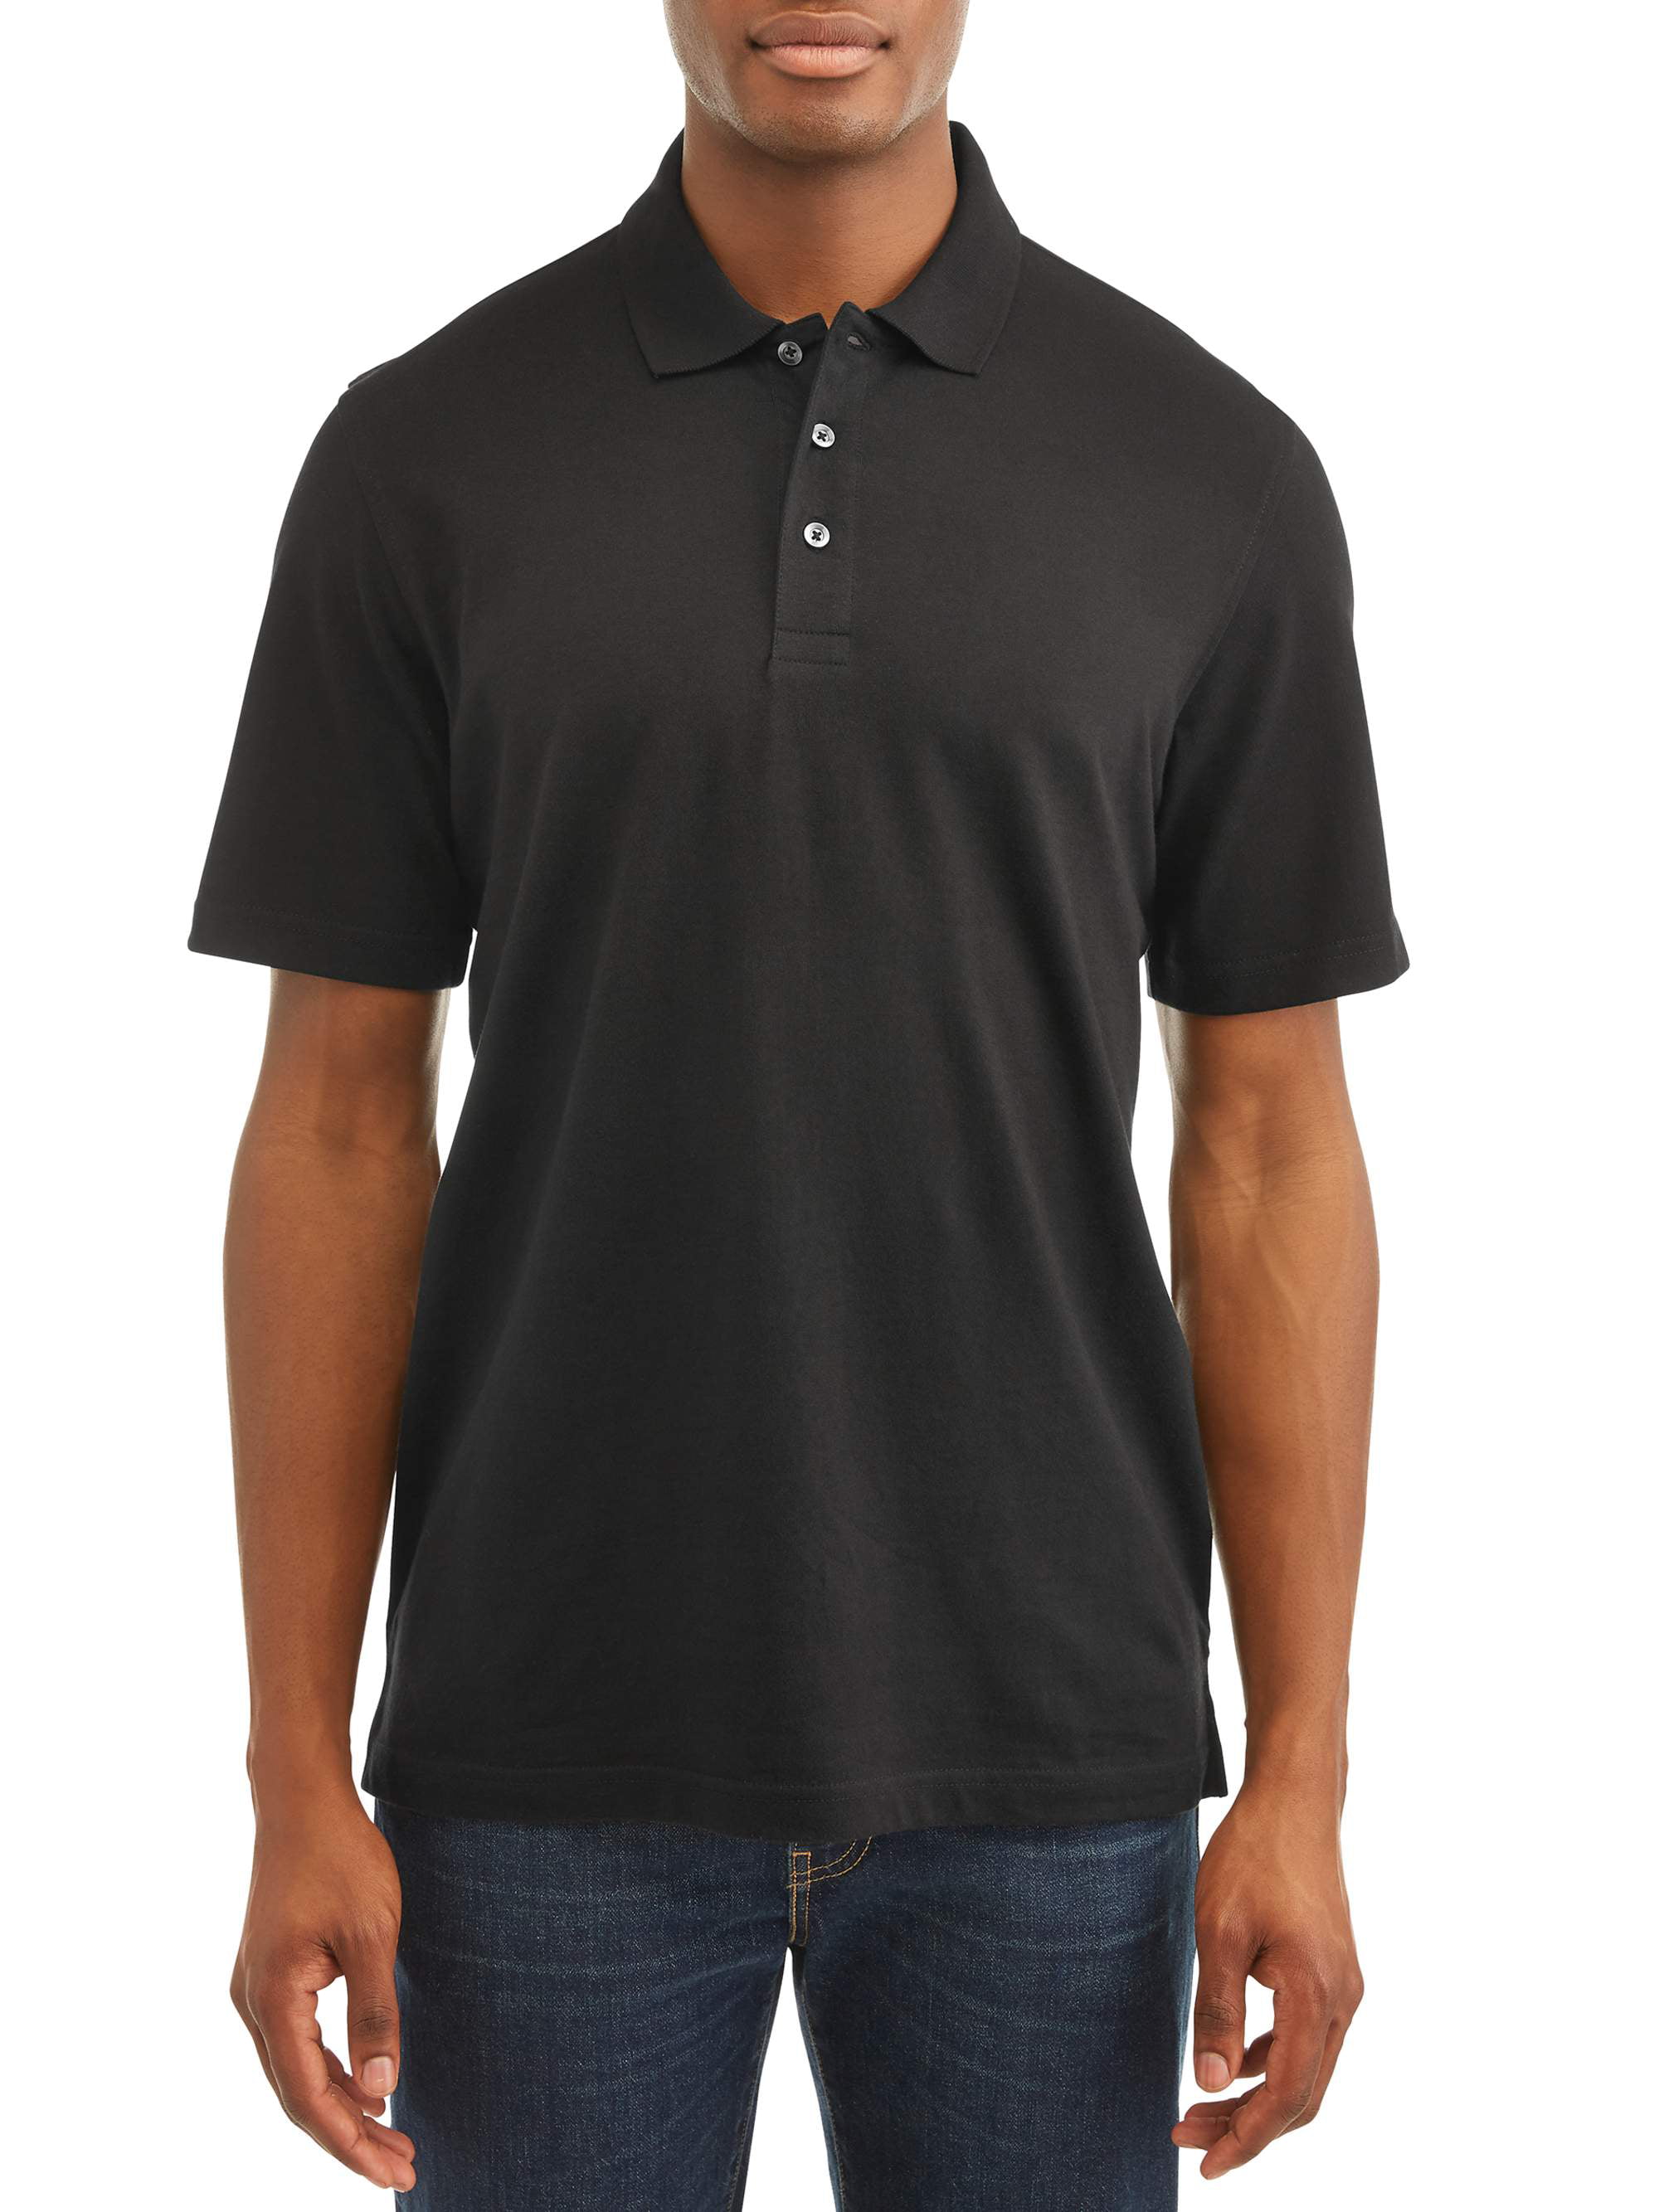 GEORGE - George Men's Short Sleeve Solid Polo Shirt - Walmart.com ...